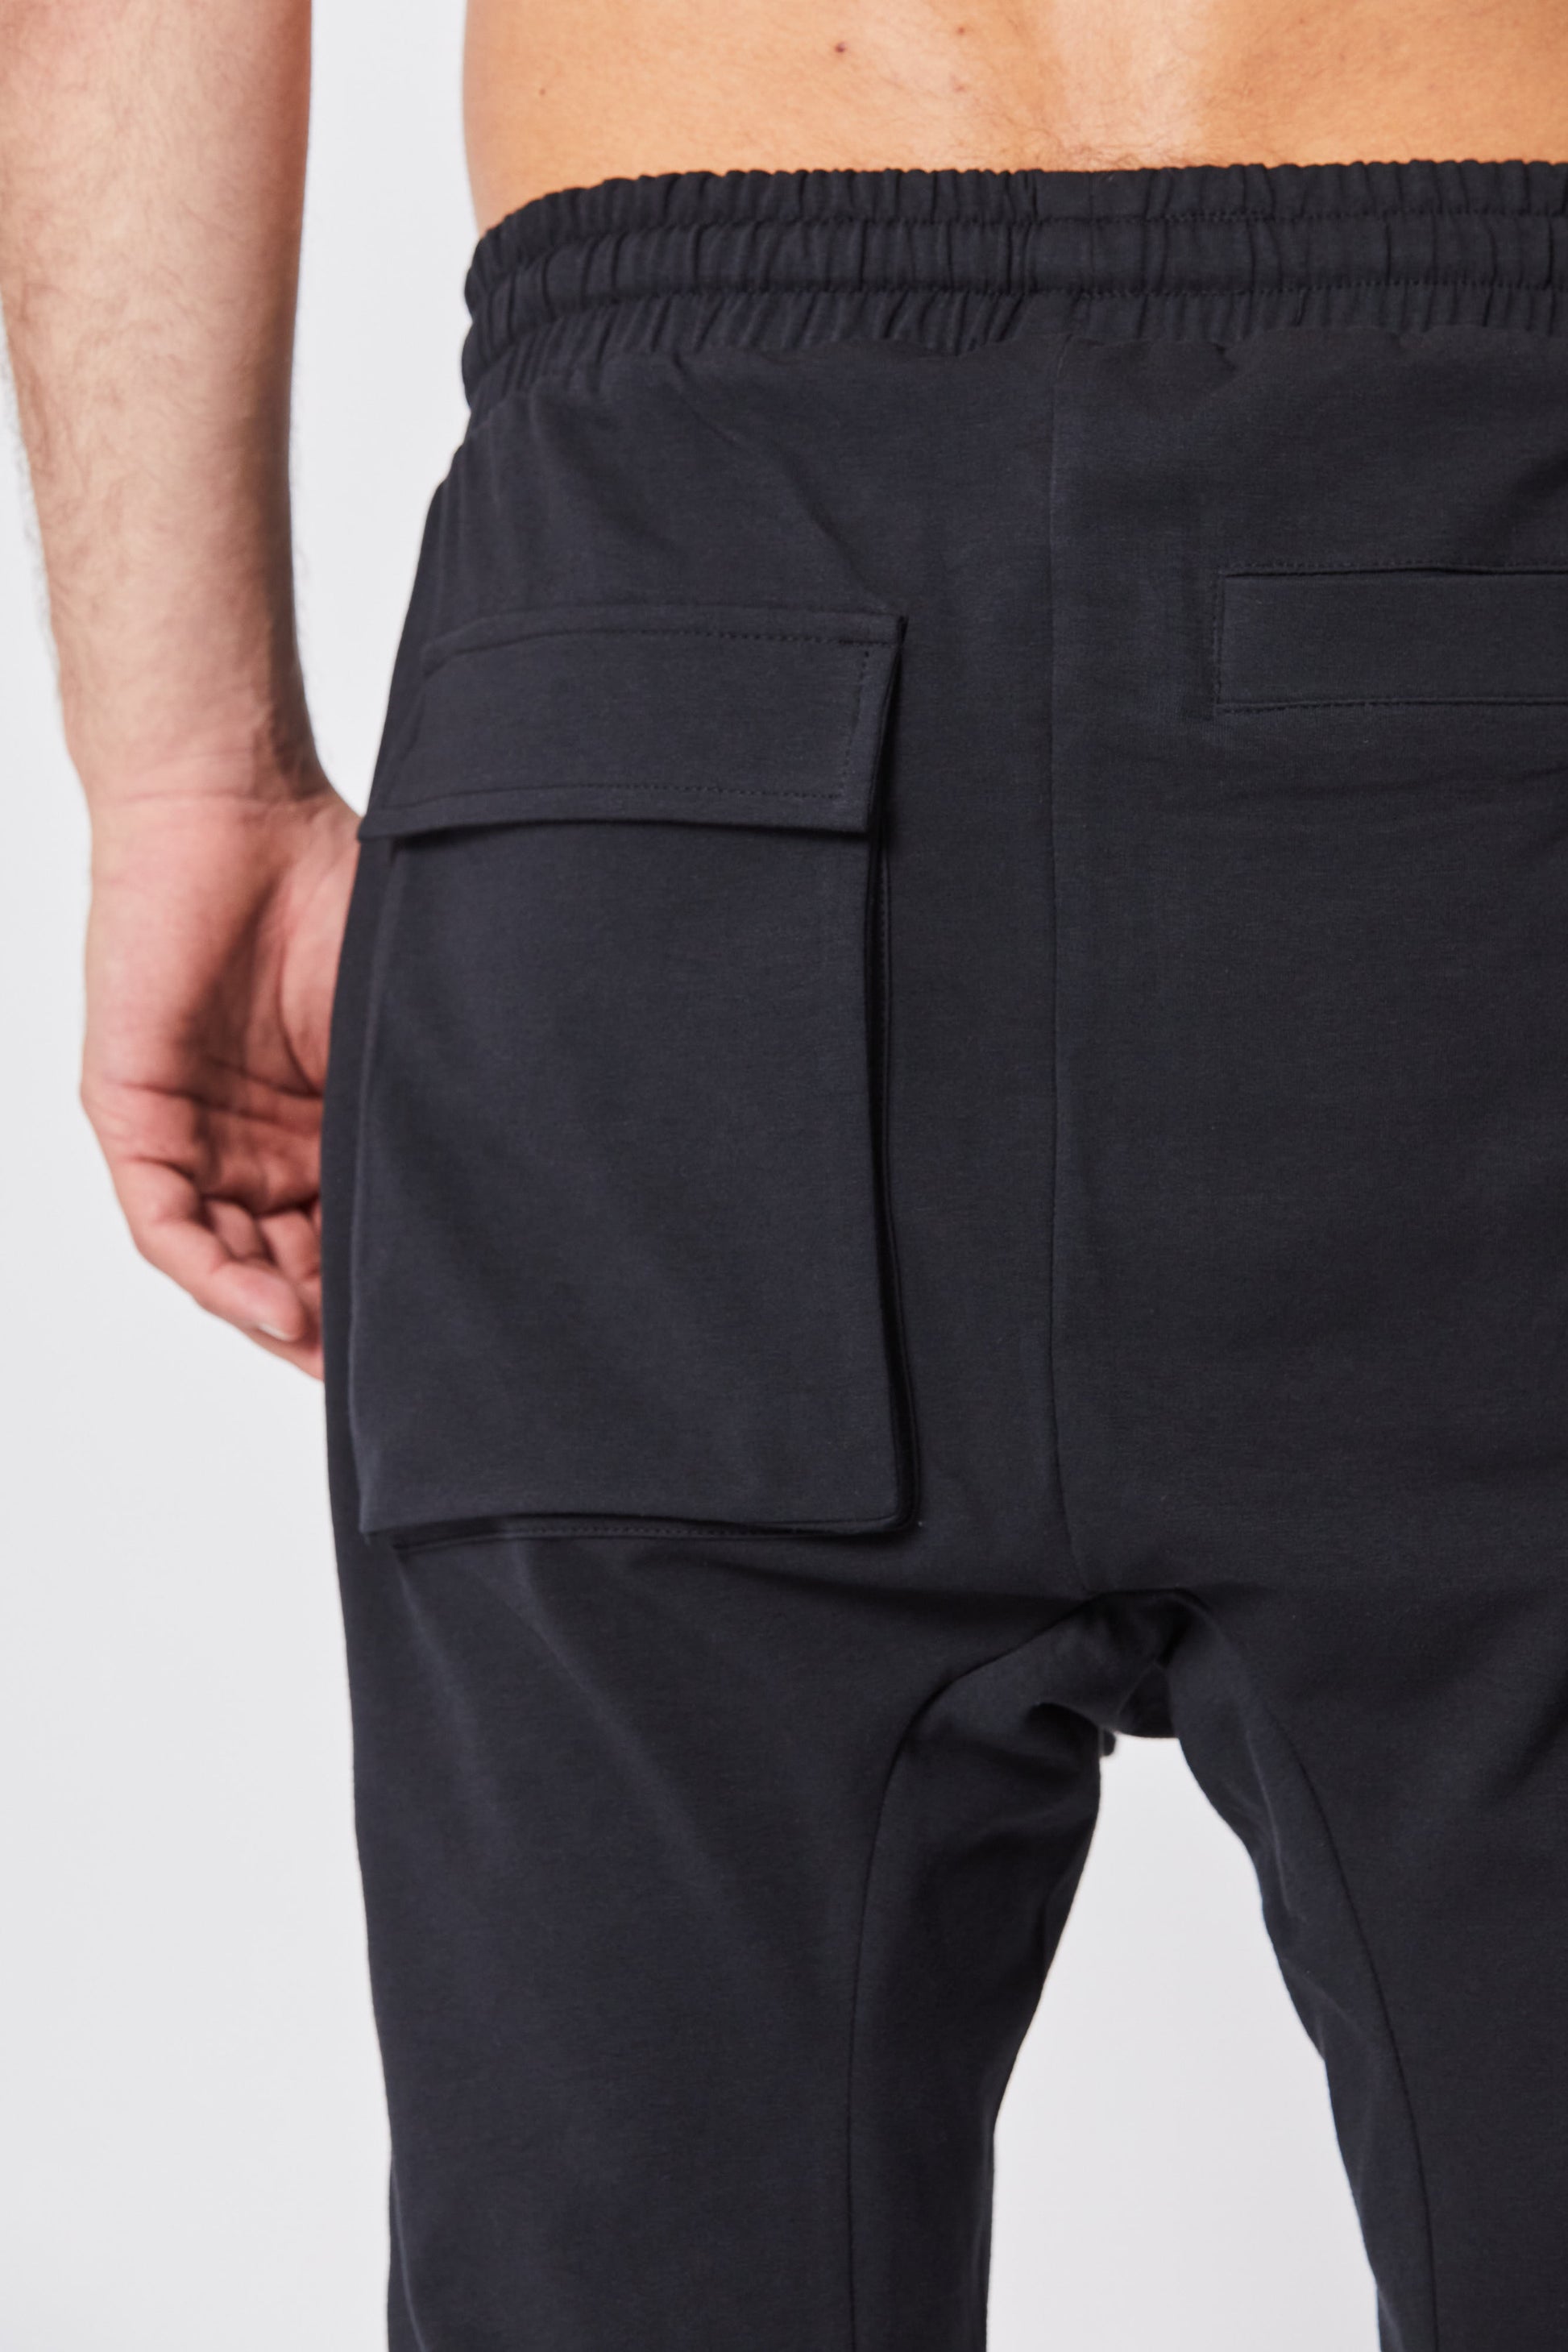 Black Stretch Cotton Modal Drop Crotch Shorts MST 379 – The Archive